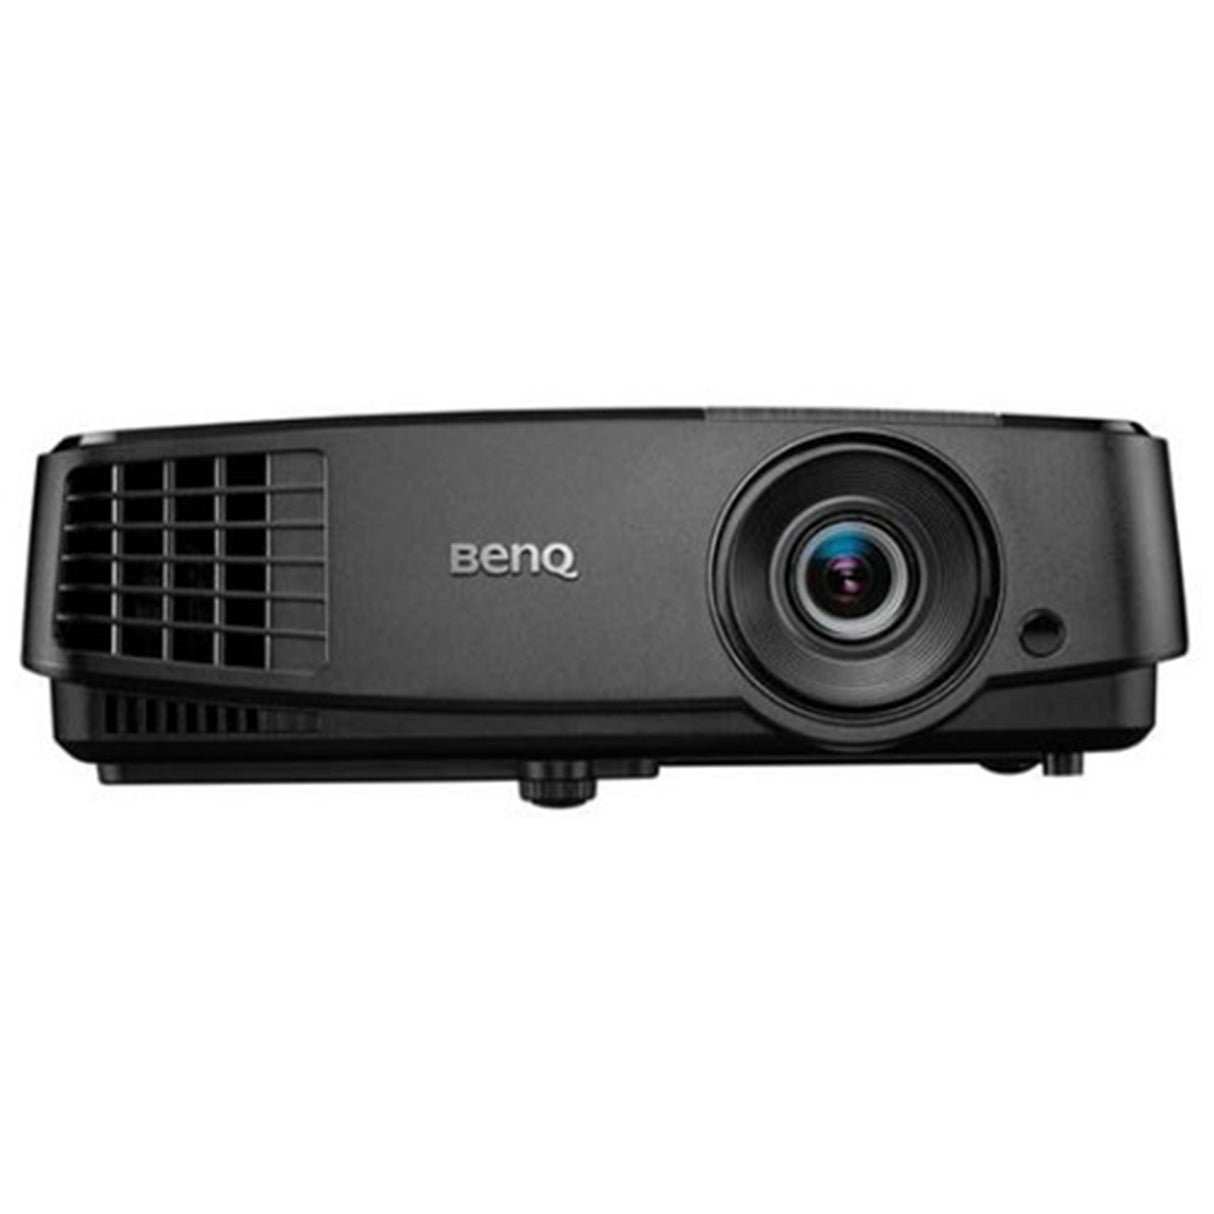 BenQ MX507P - Small Space XGA Business Projector